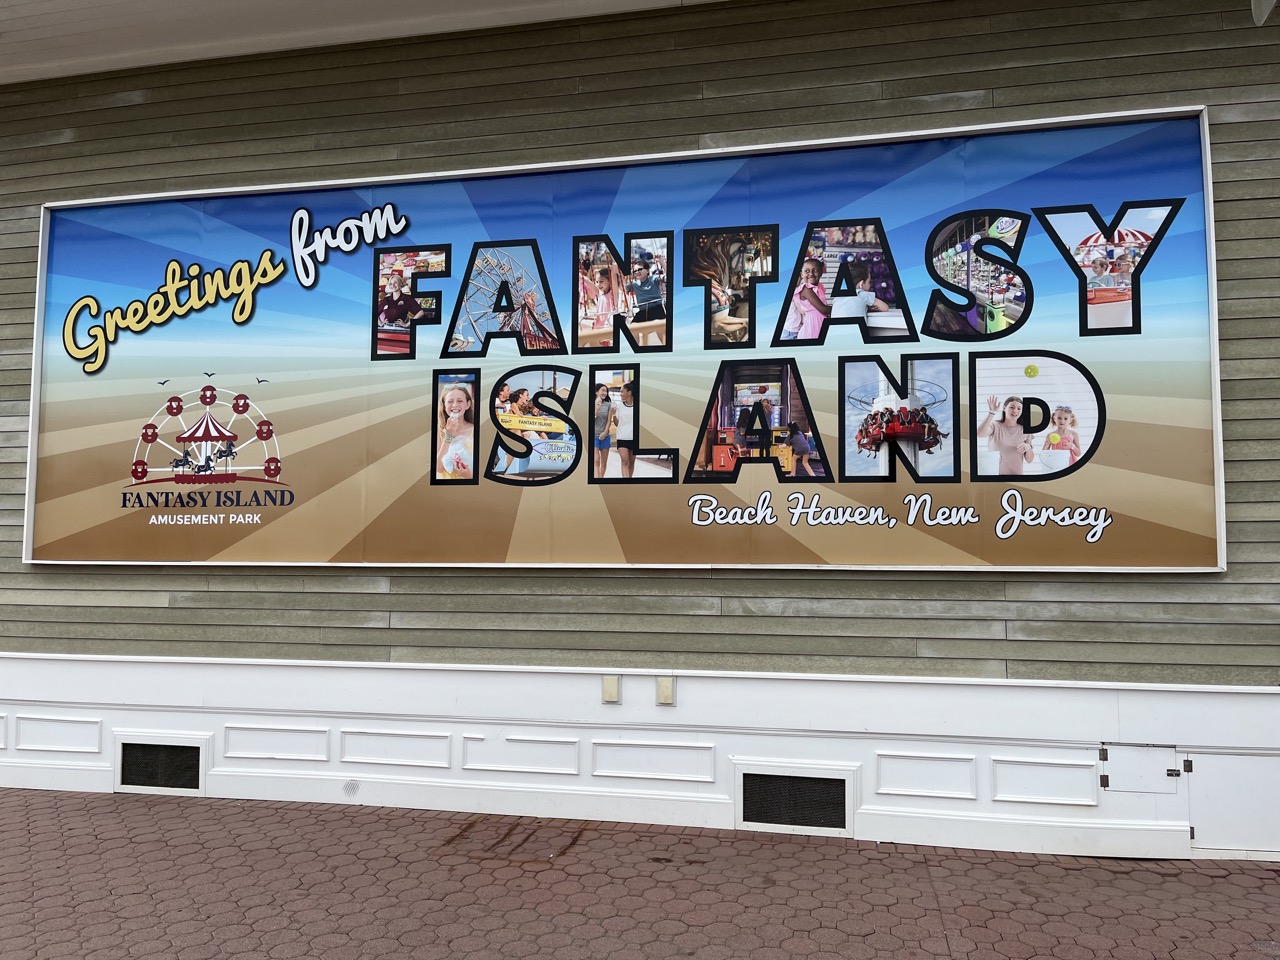 Fantasy Island Amusement Park Billboard like sign